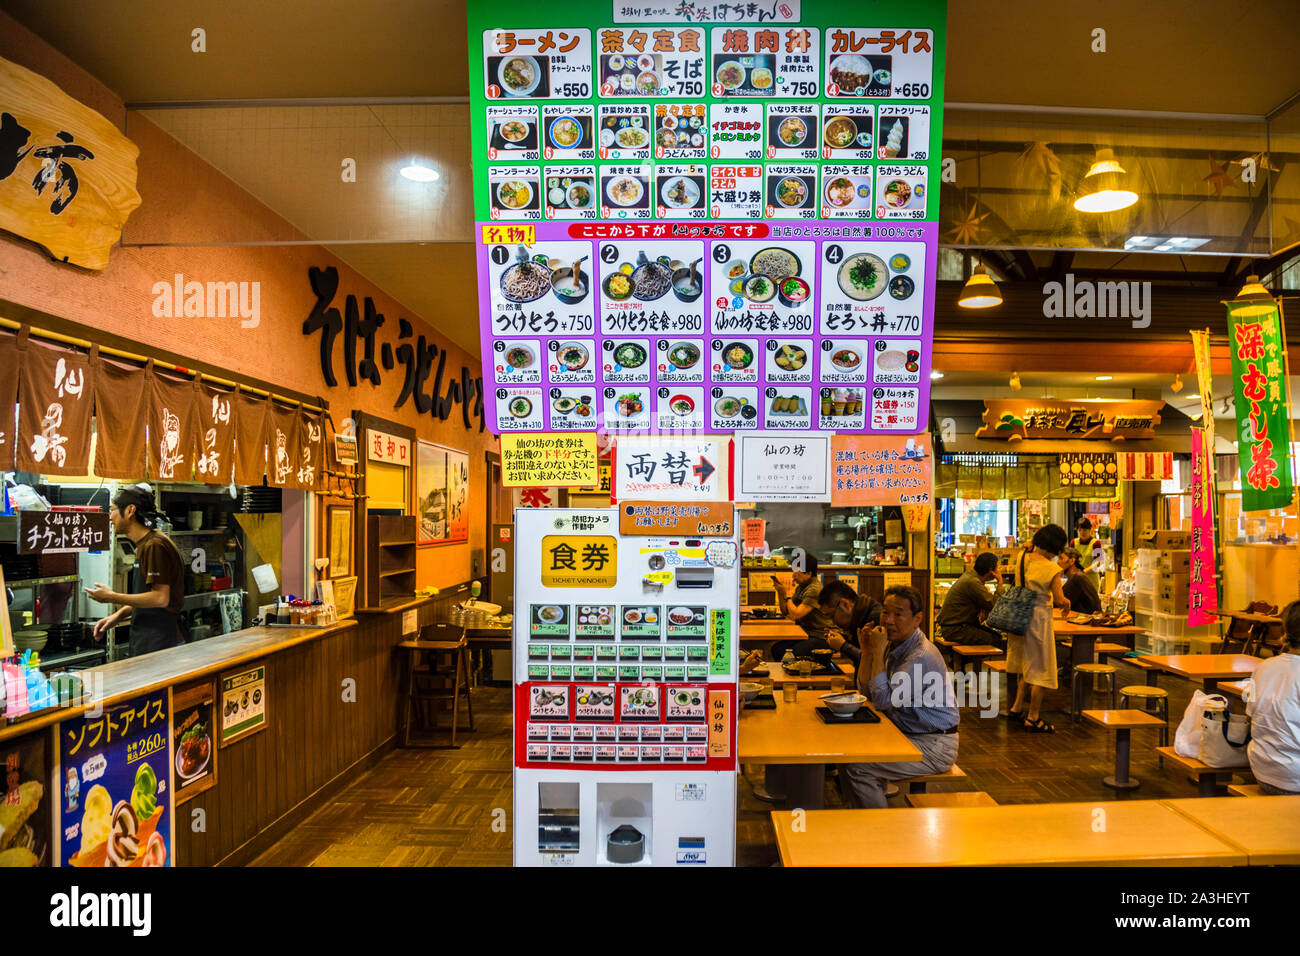 Japan Fast Food Restaurant Impressions Stock Photo